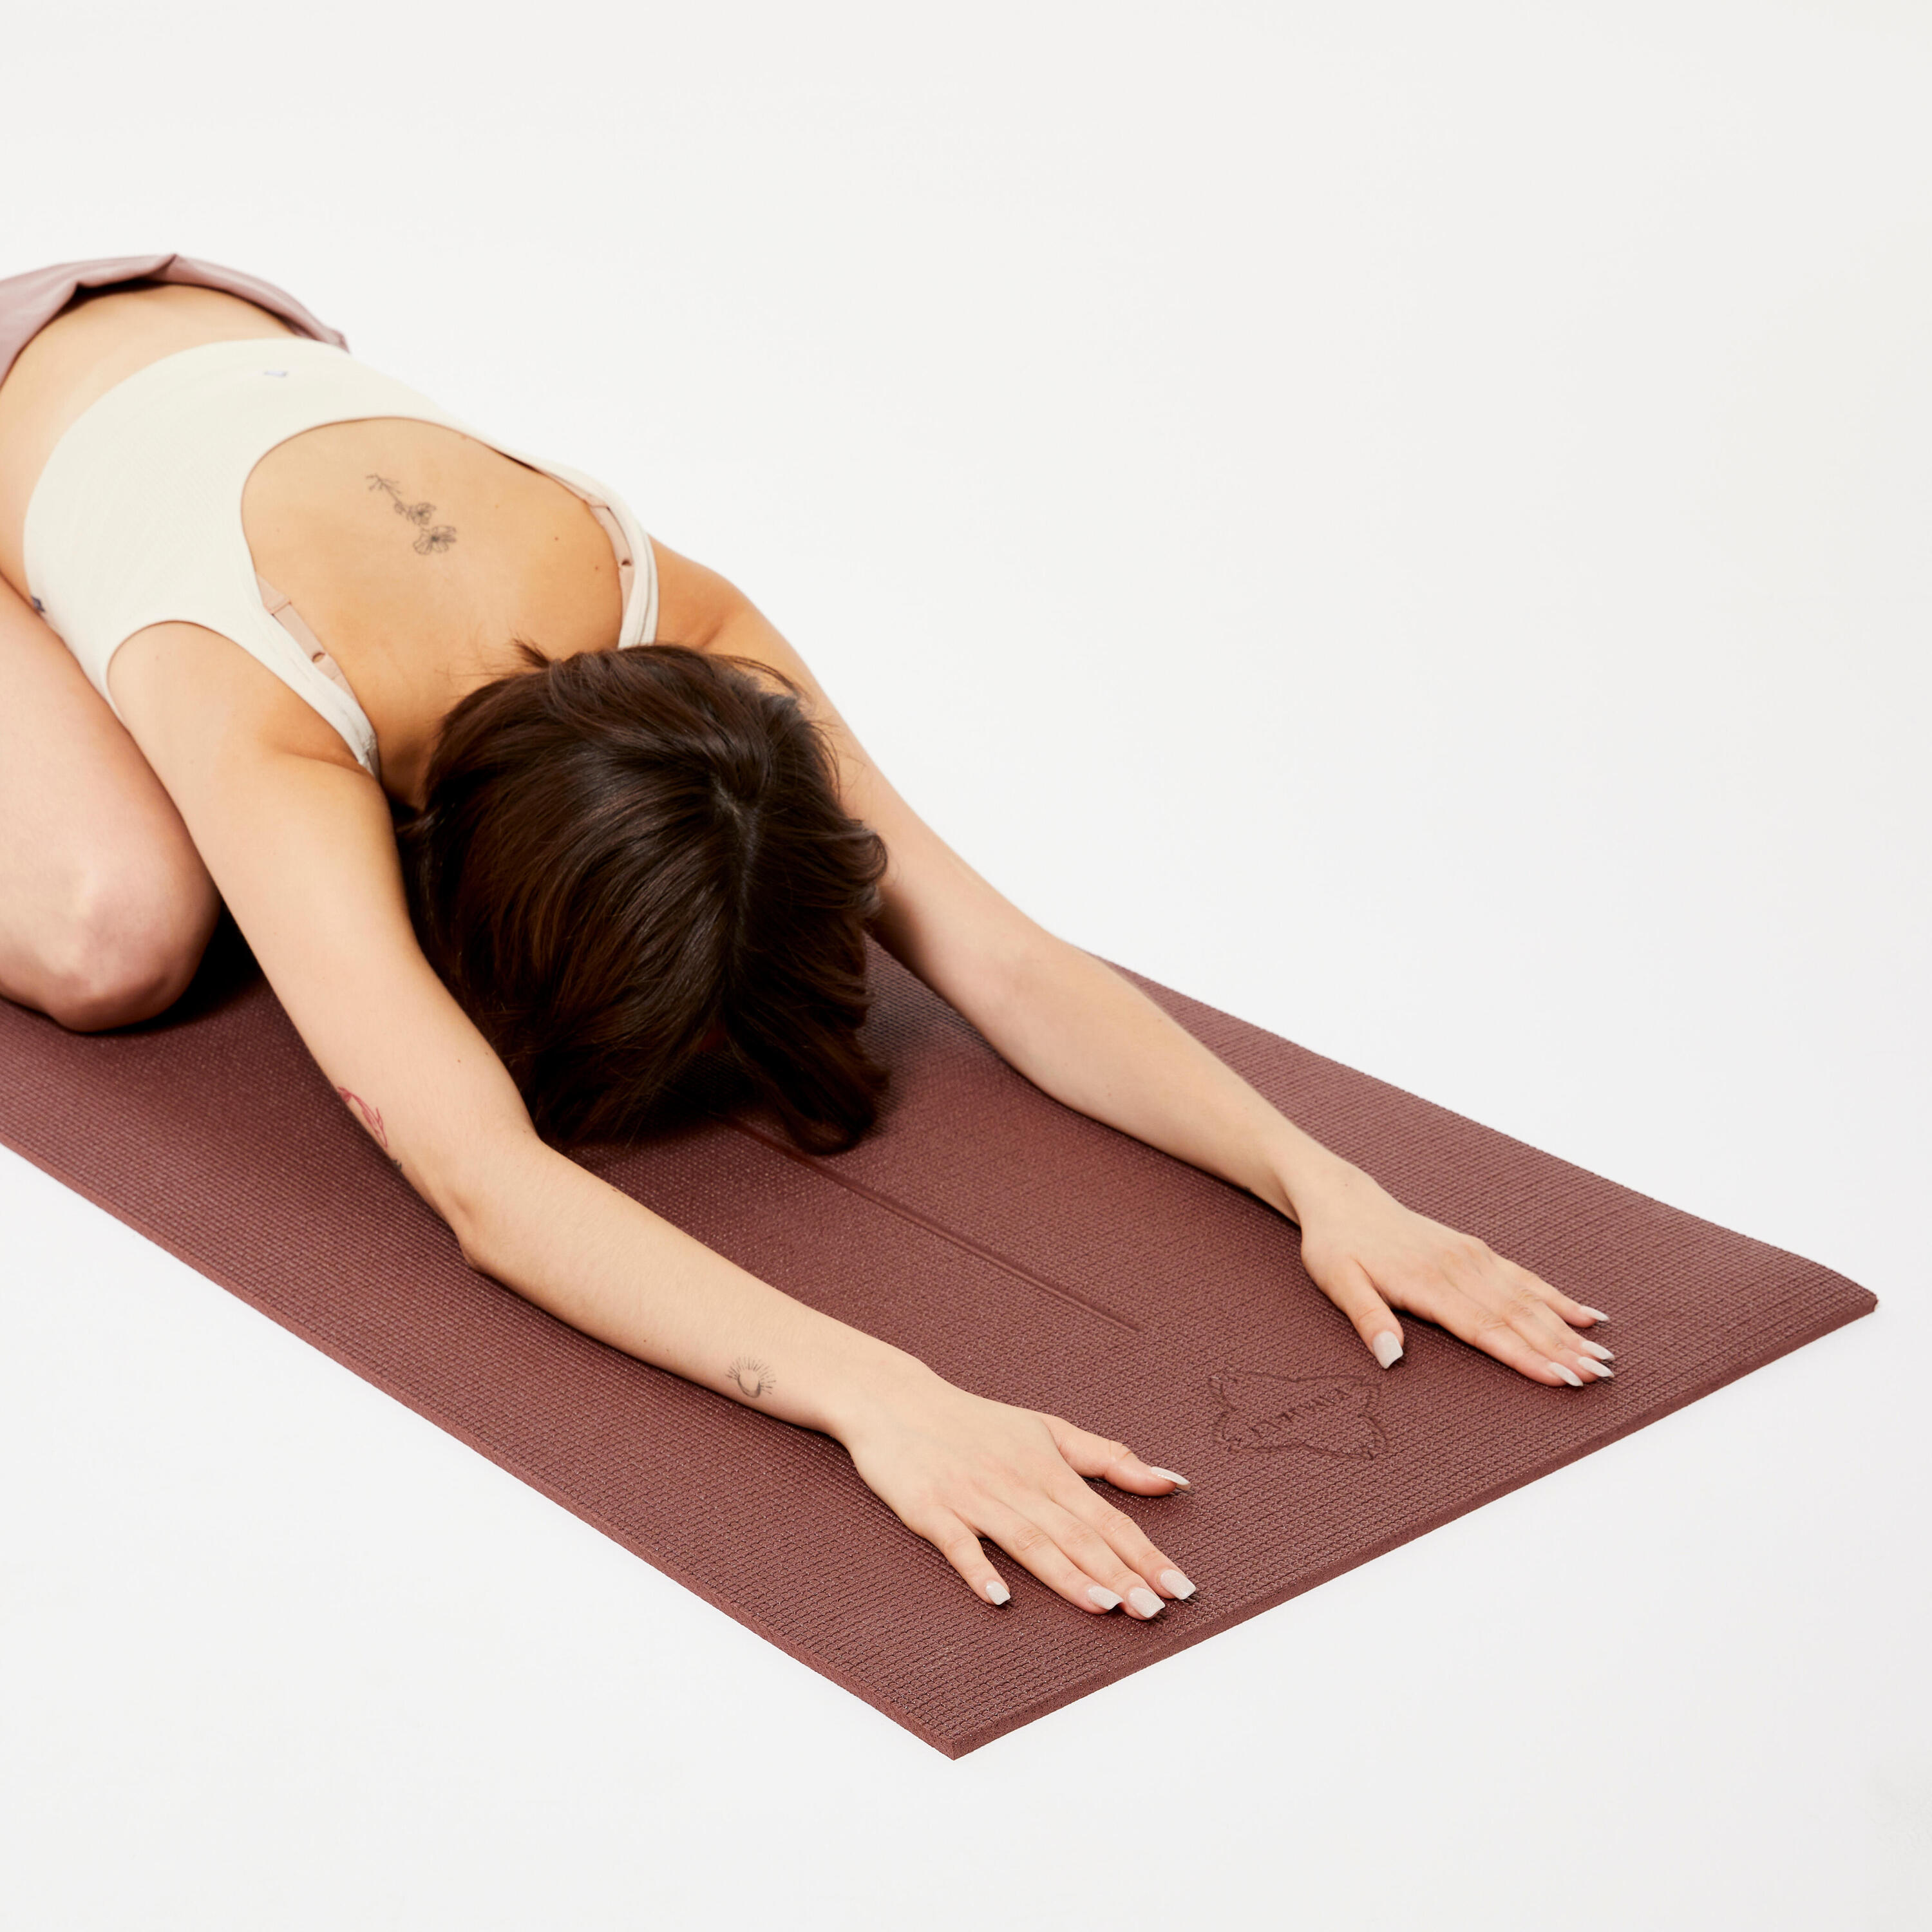 Gentle Yoga Comfort Mat 173 cm ⨯ 61 cm ⨯ 8 mm - Mahogany KIMJALY